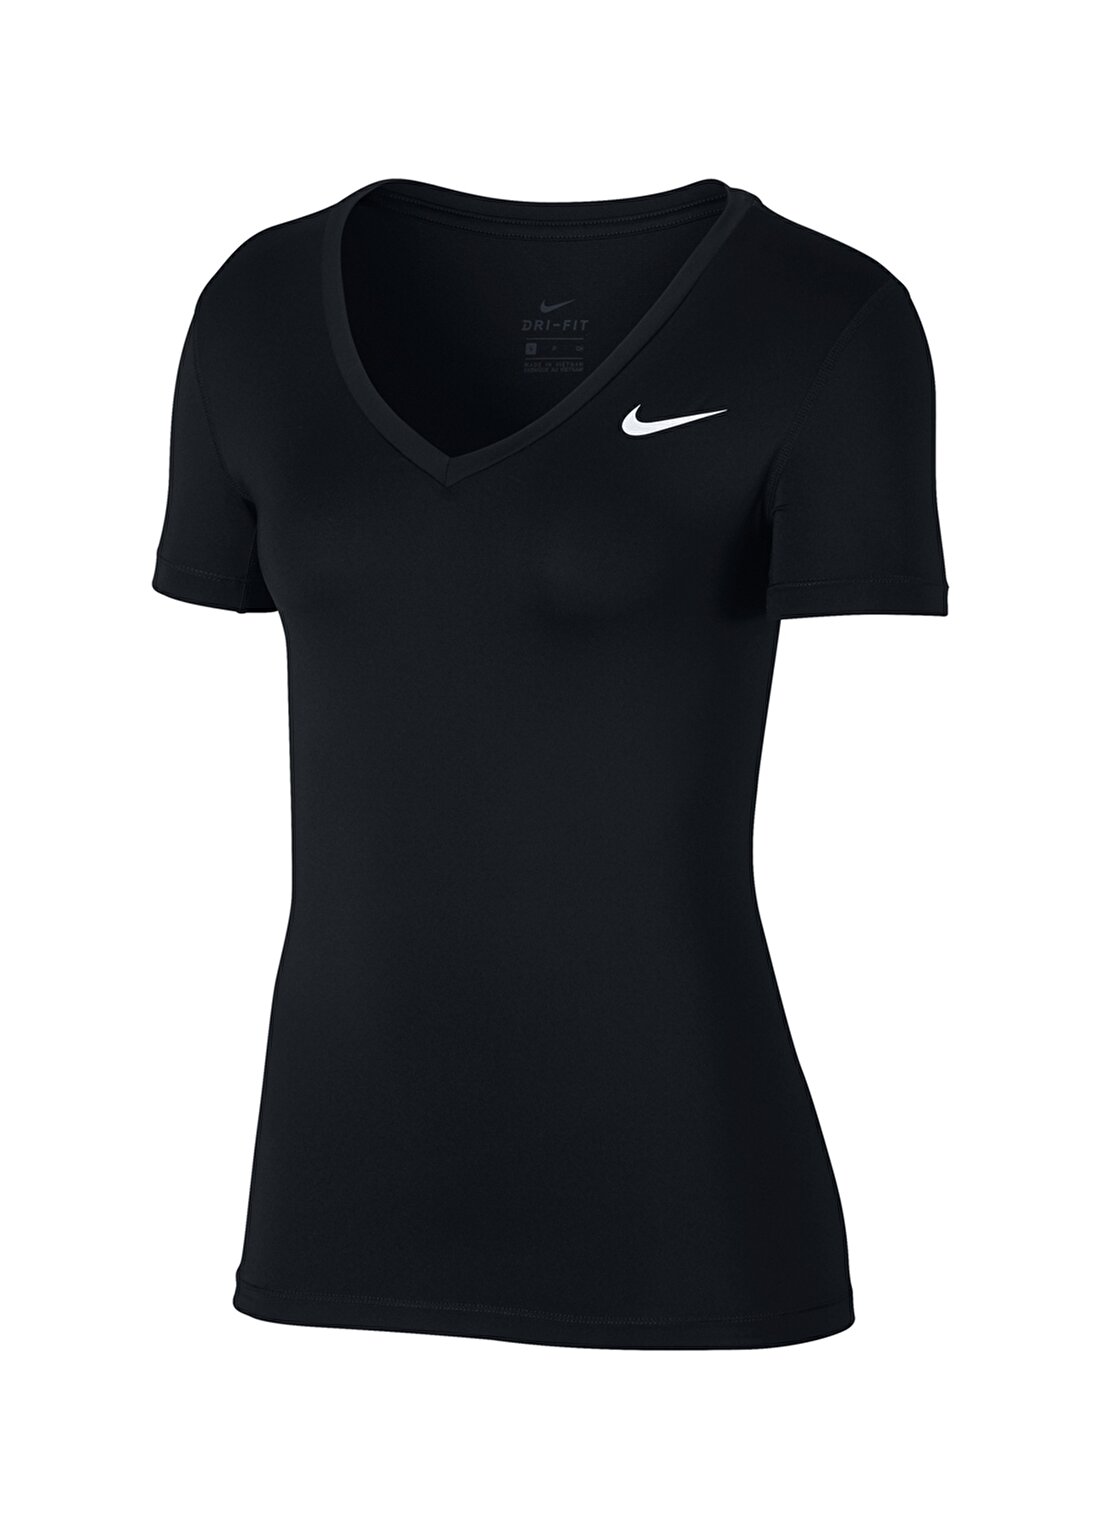 Nike Training 889557-010 T-Shirt